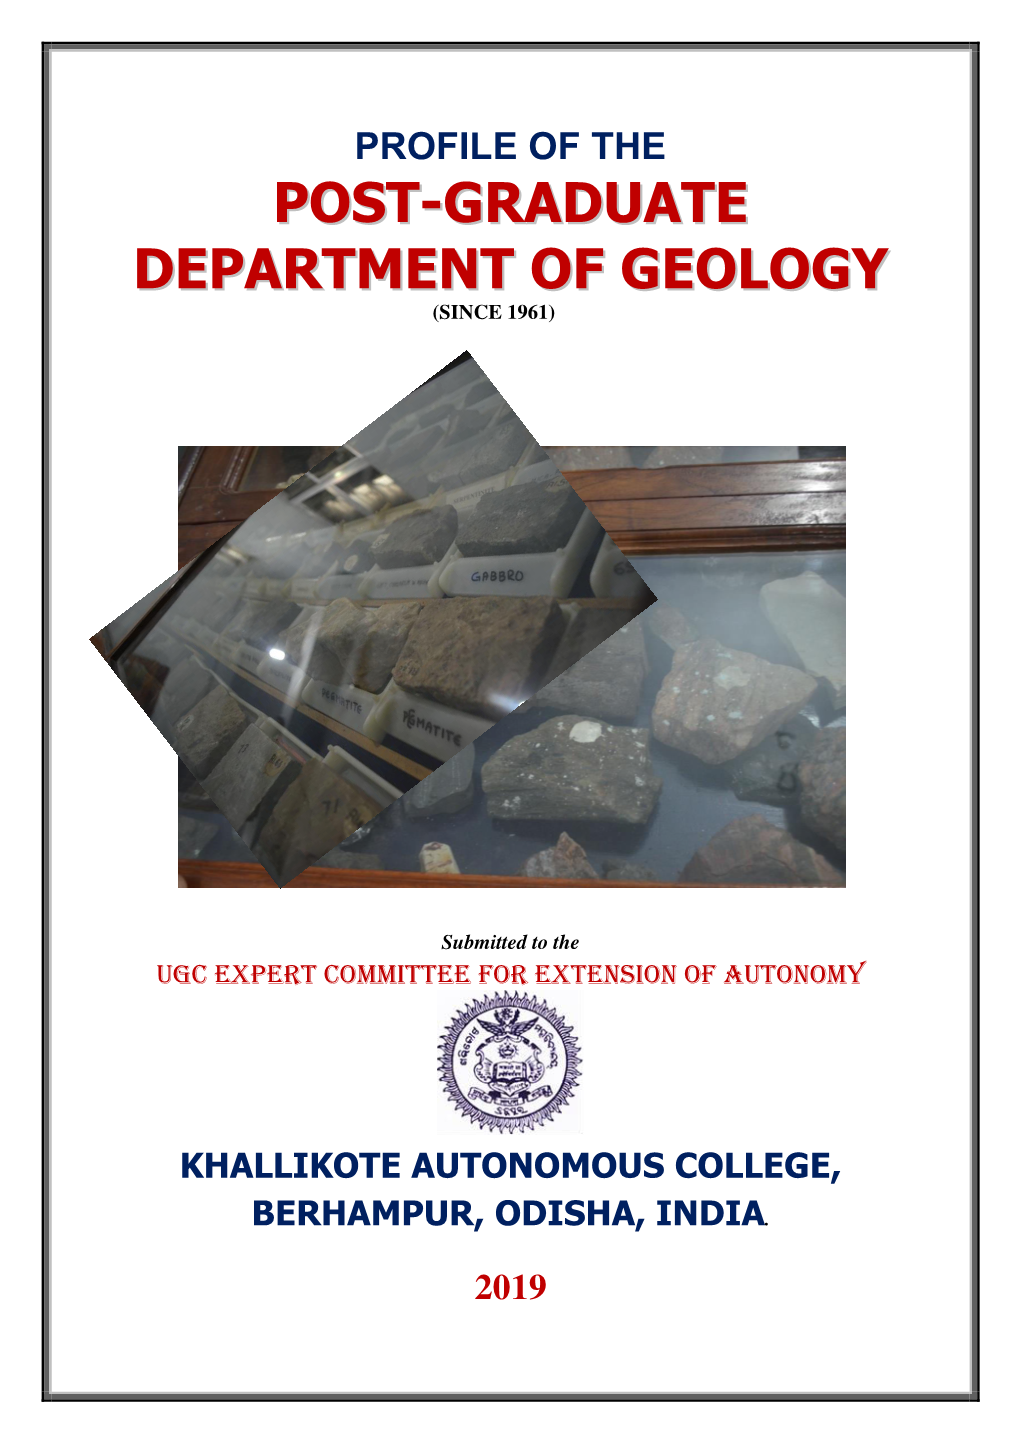 Post-Graduate Department of Geology